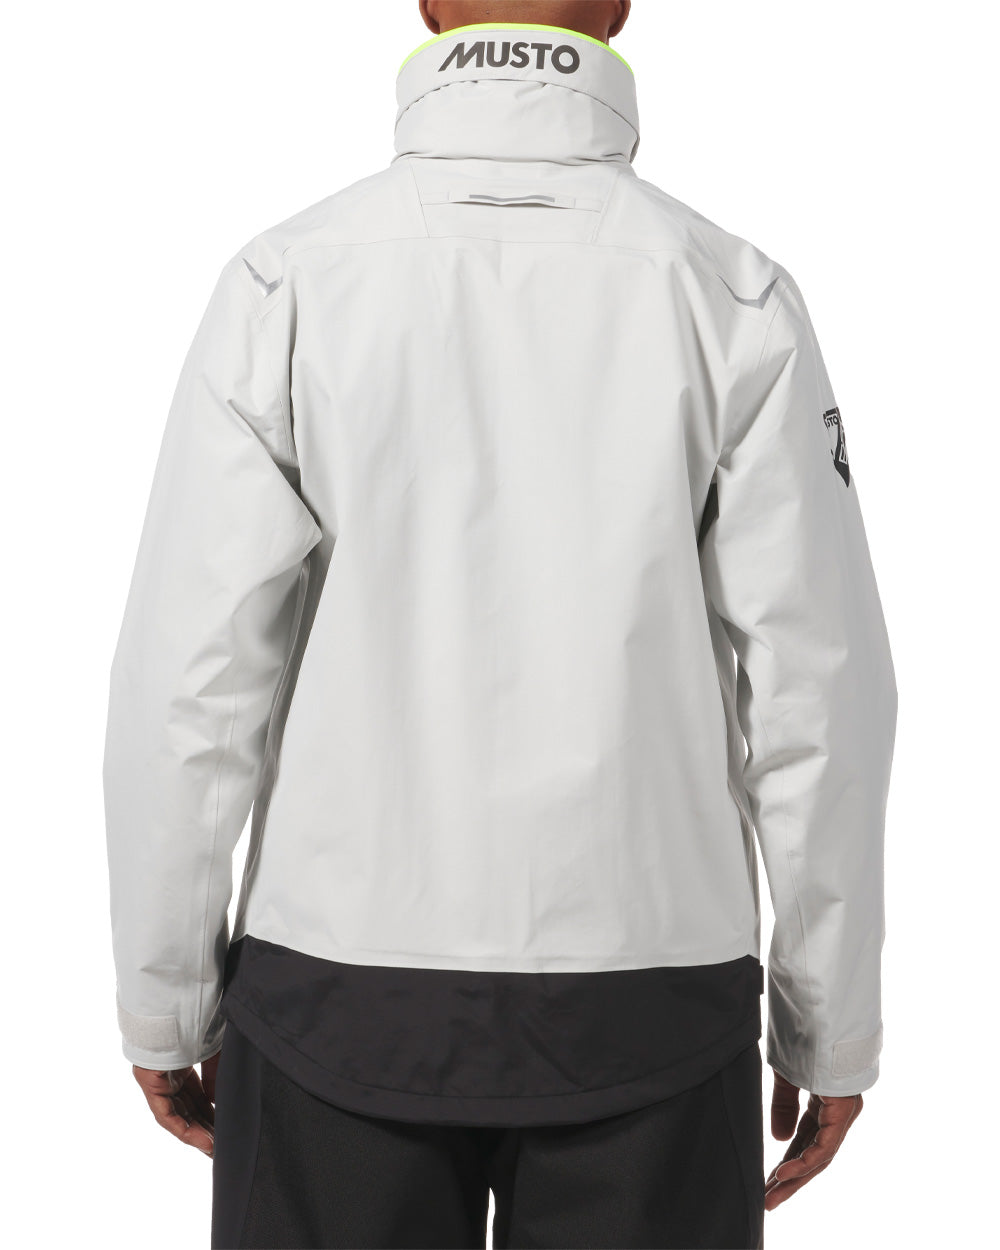 Platinum coloured Musto BR1 Solent Jacket on White background 